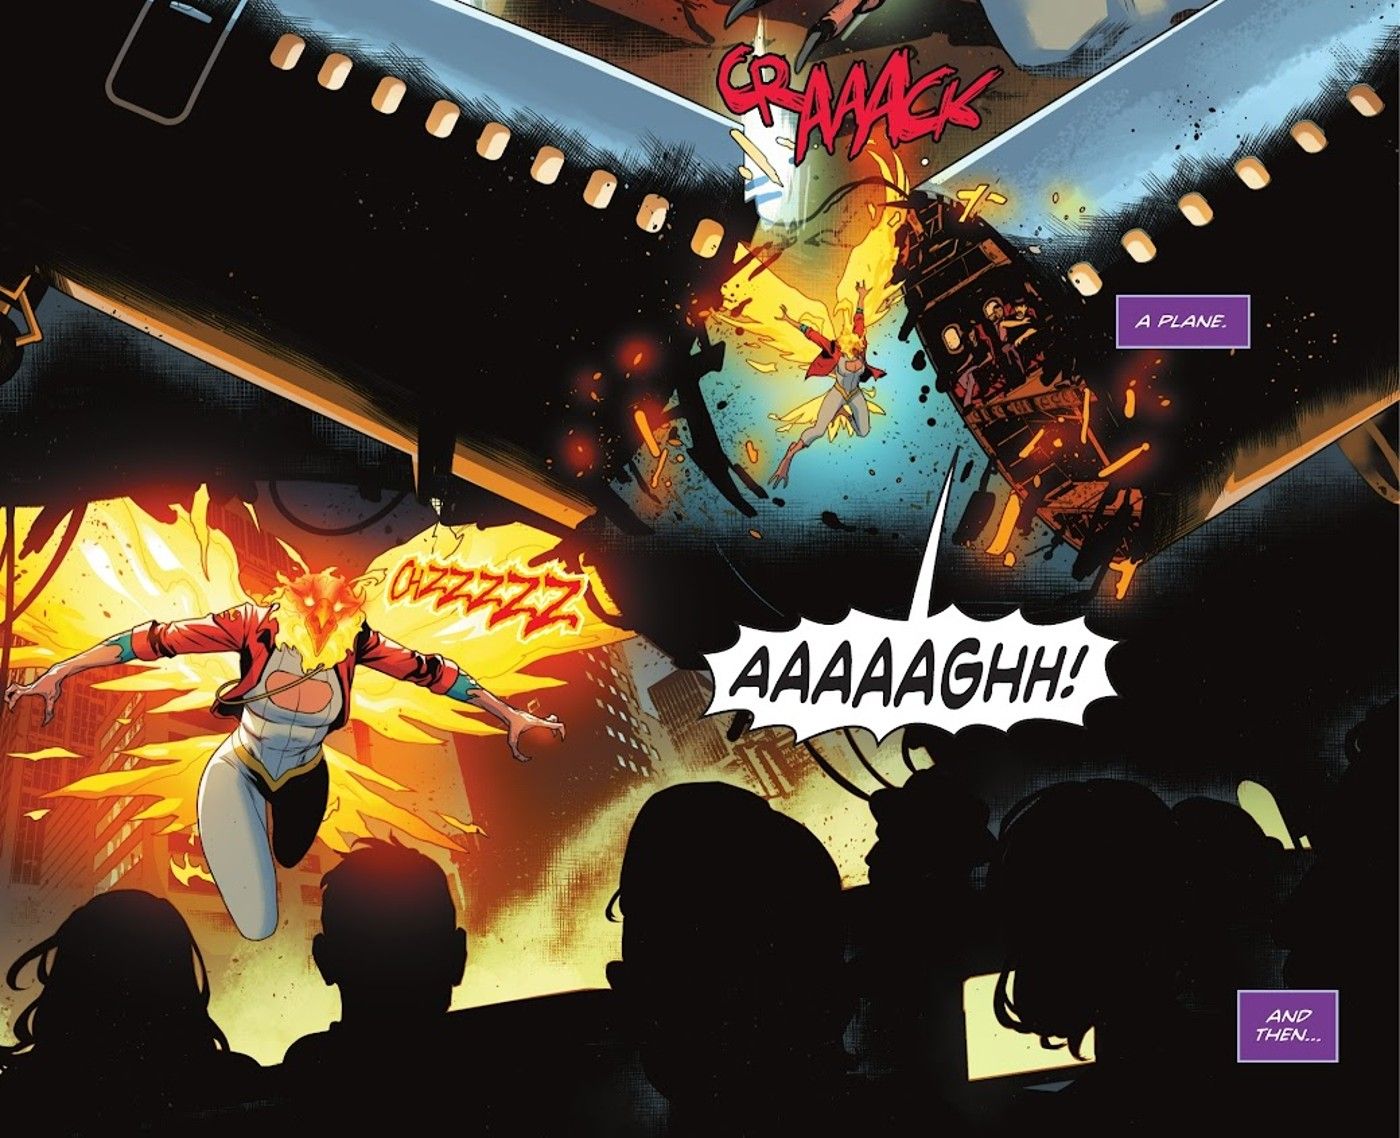 Comic book panels: Power Girl in a flaming bird beast form splits a plane.